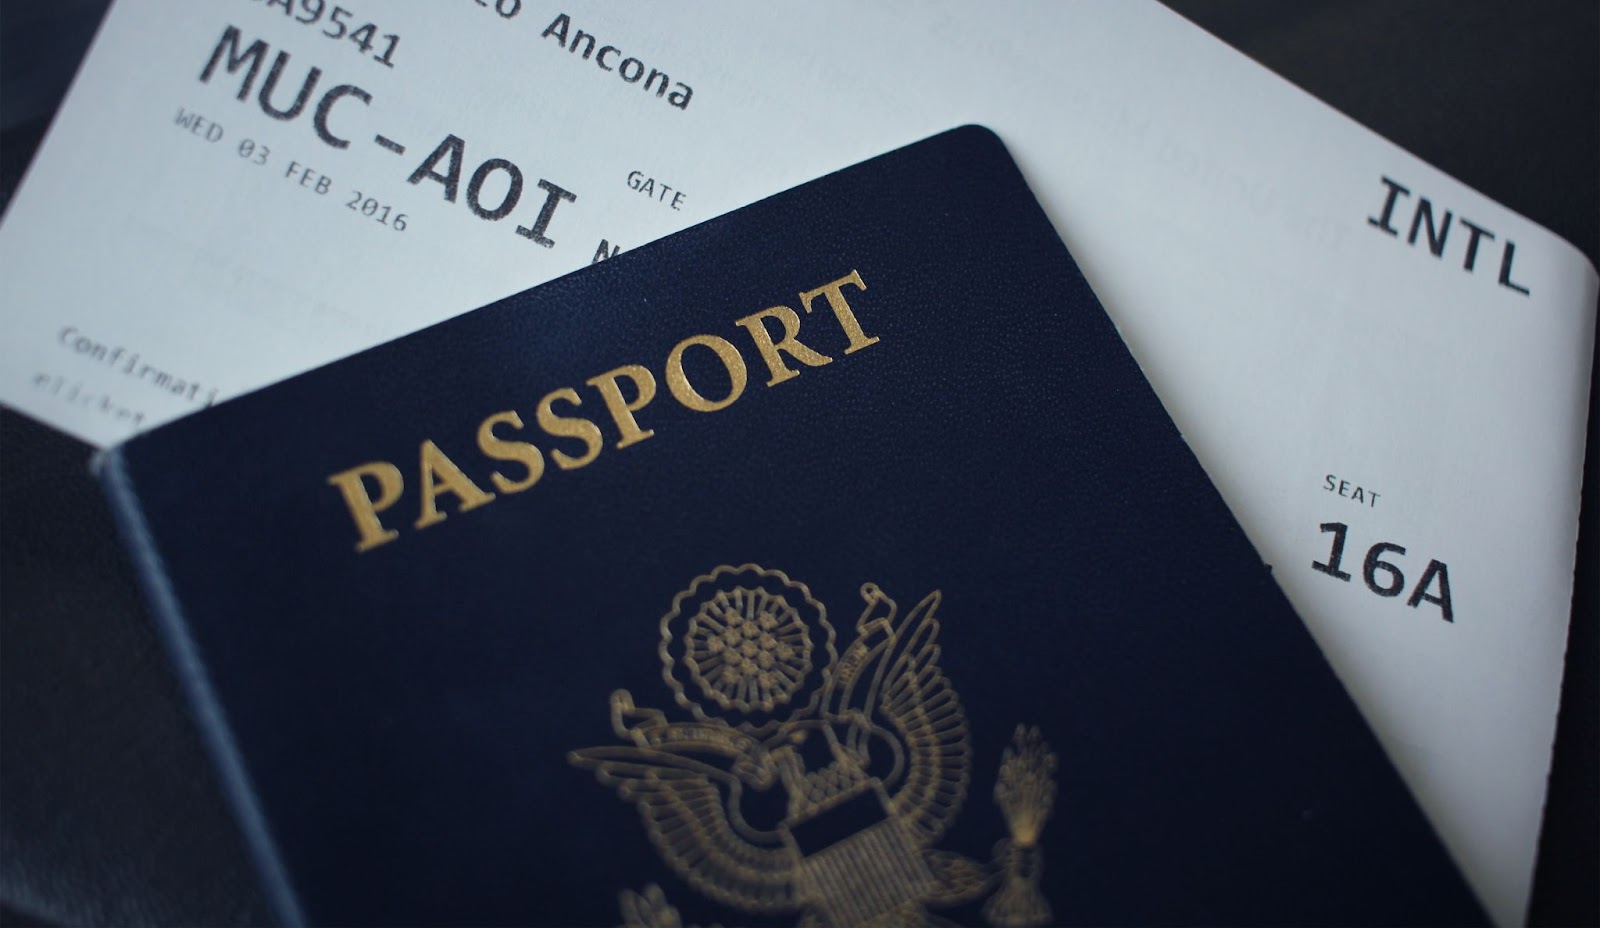 United States passport and plane ticket